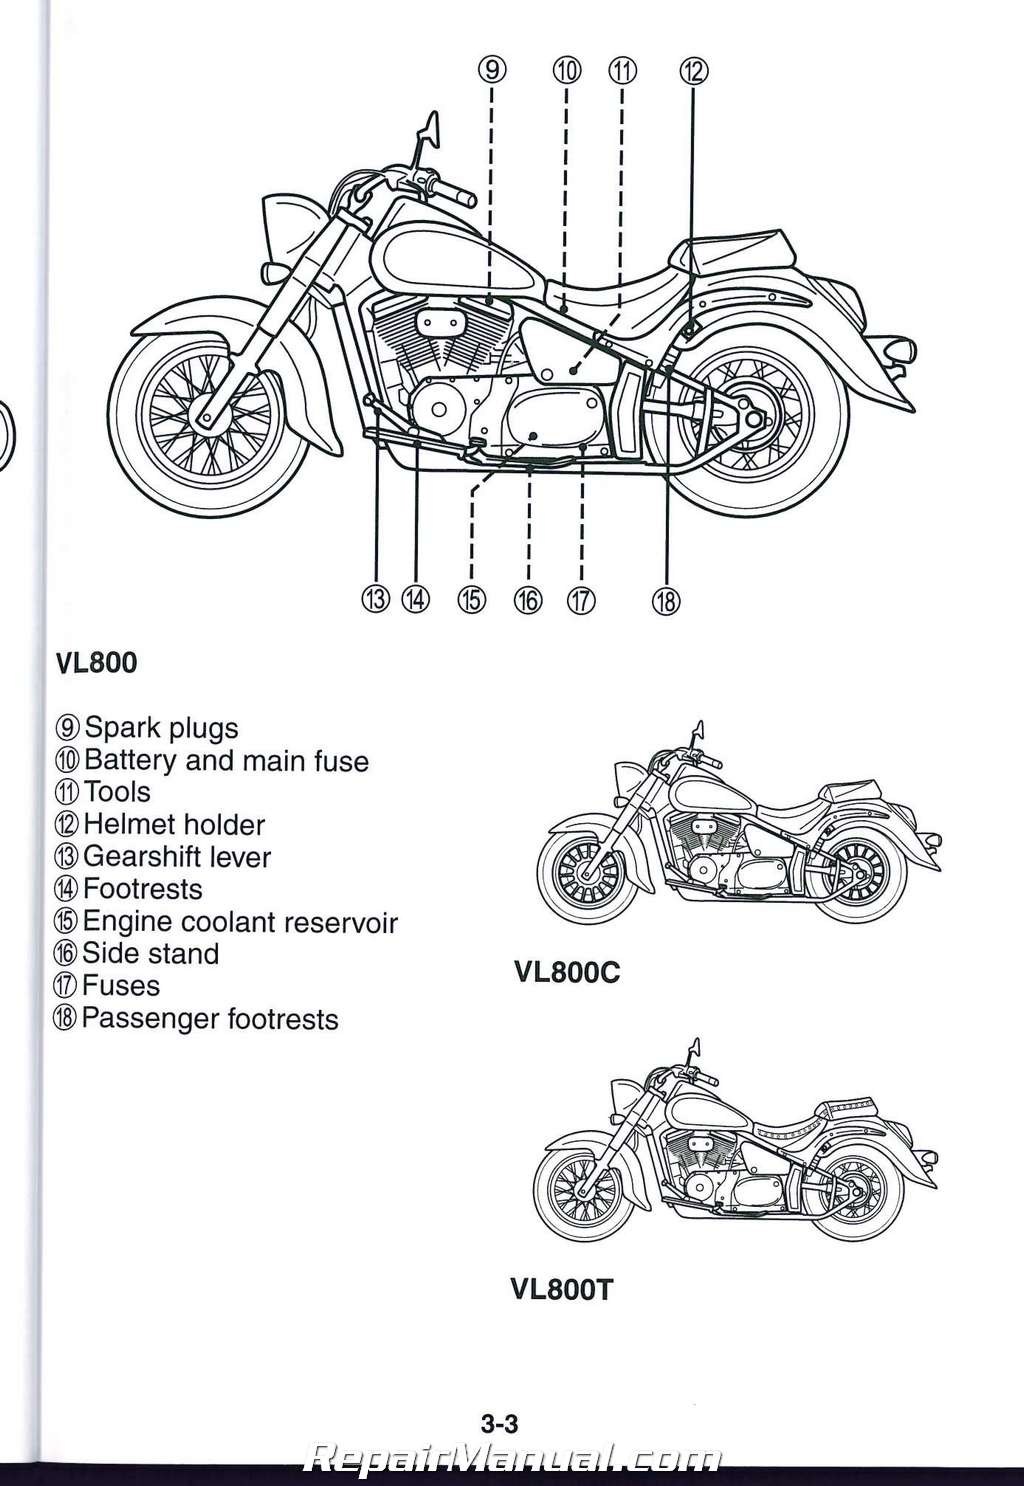 2009 suzuki boulevard manual - Suzuki Boulevard C CC CT VL C T Motorcycle Owners Manual